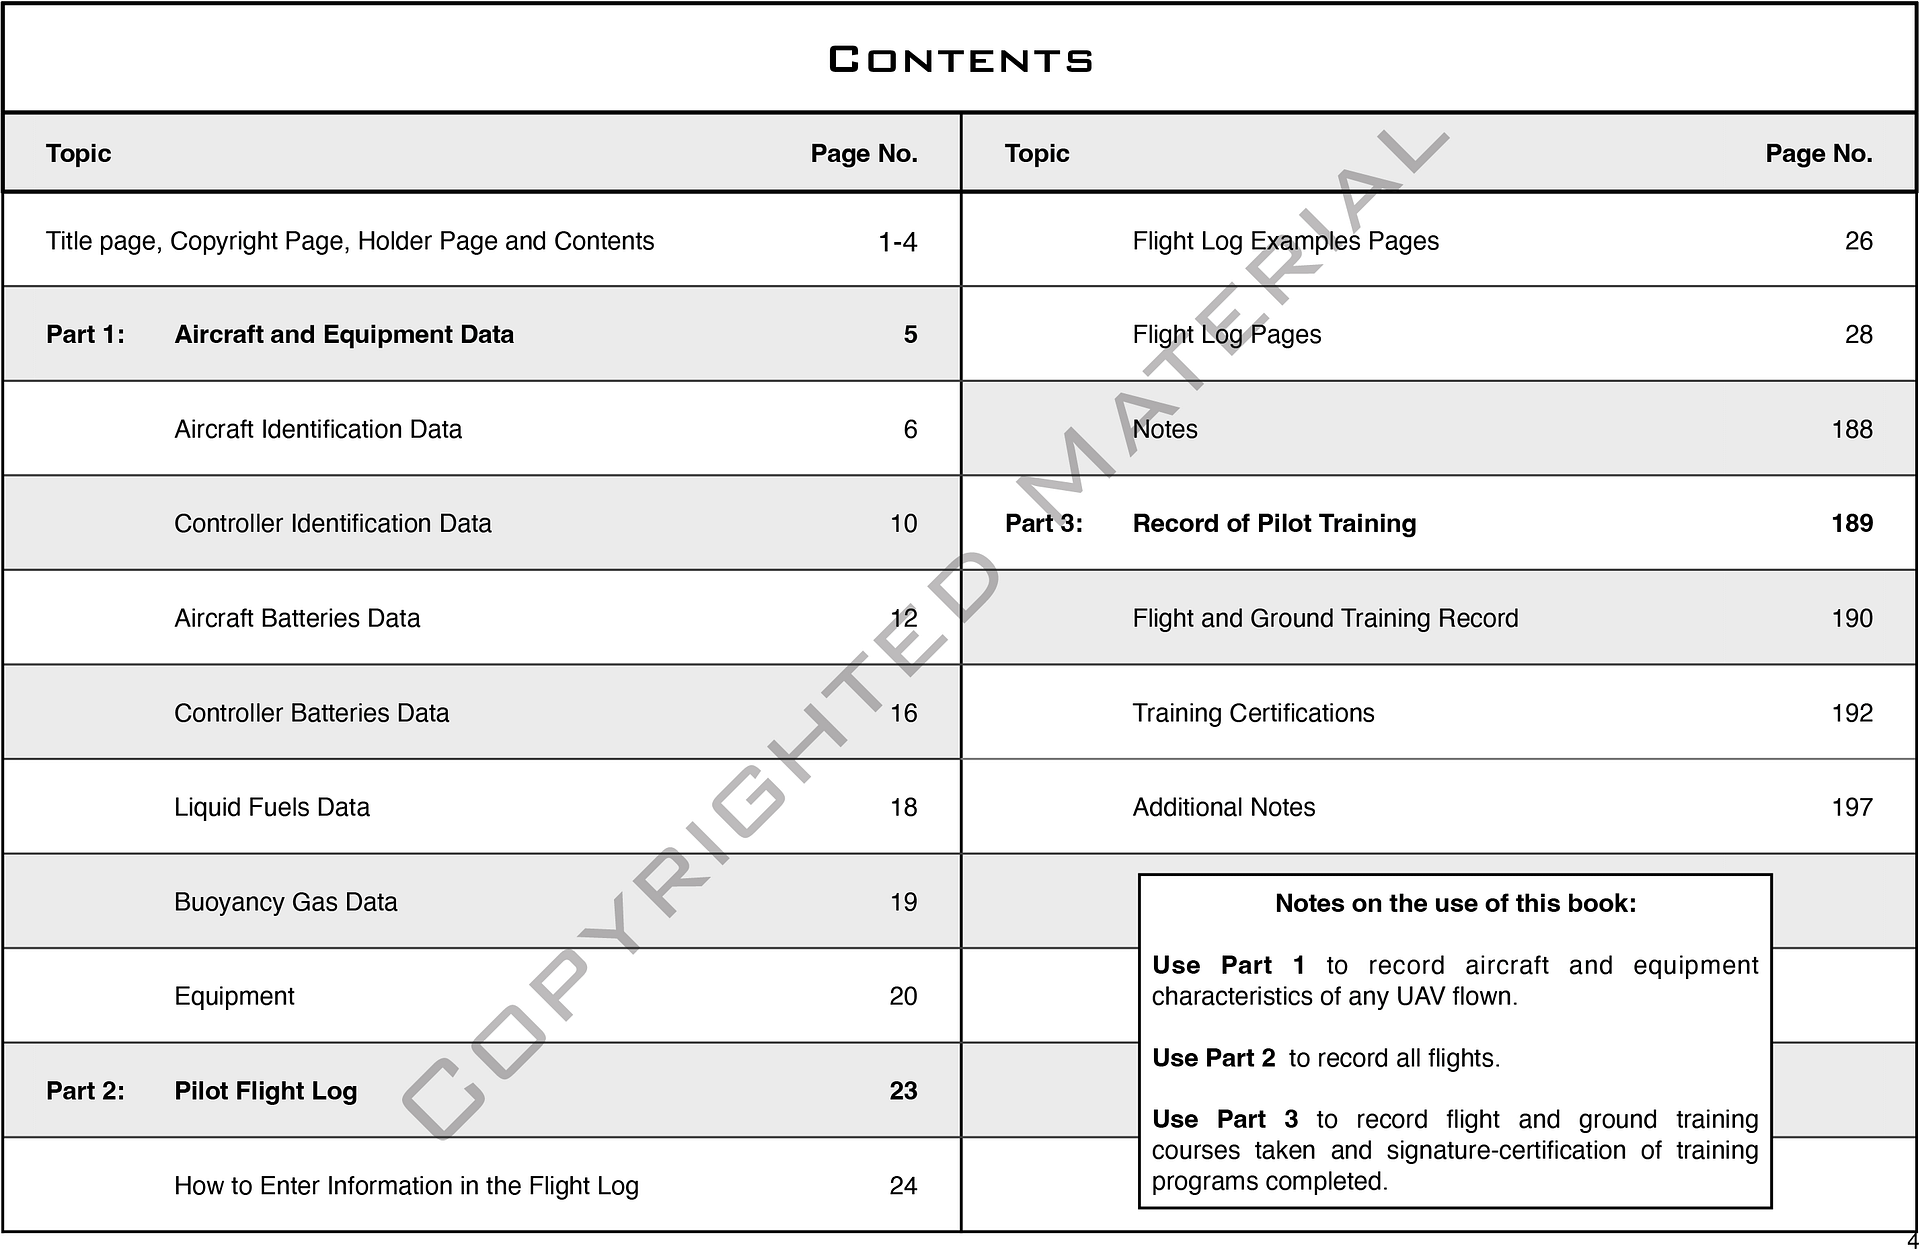 Drone Digital Edition contents page